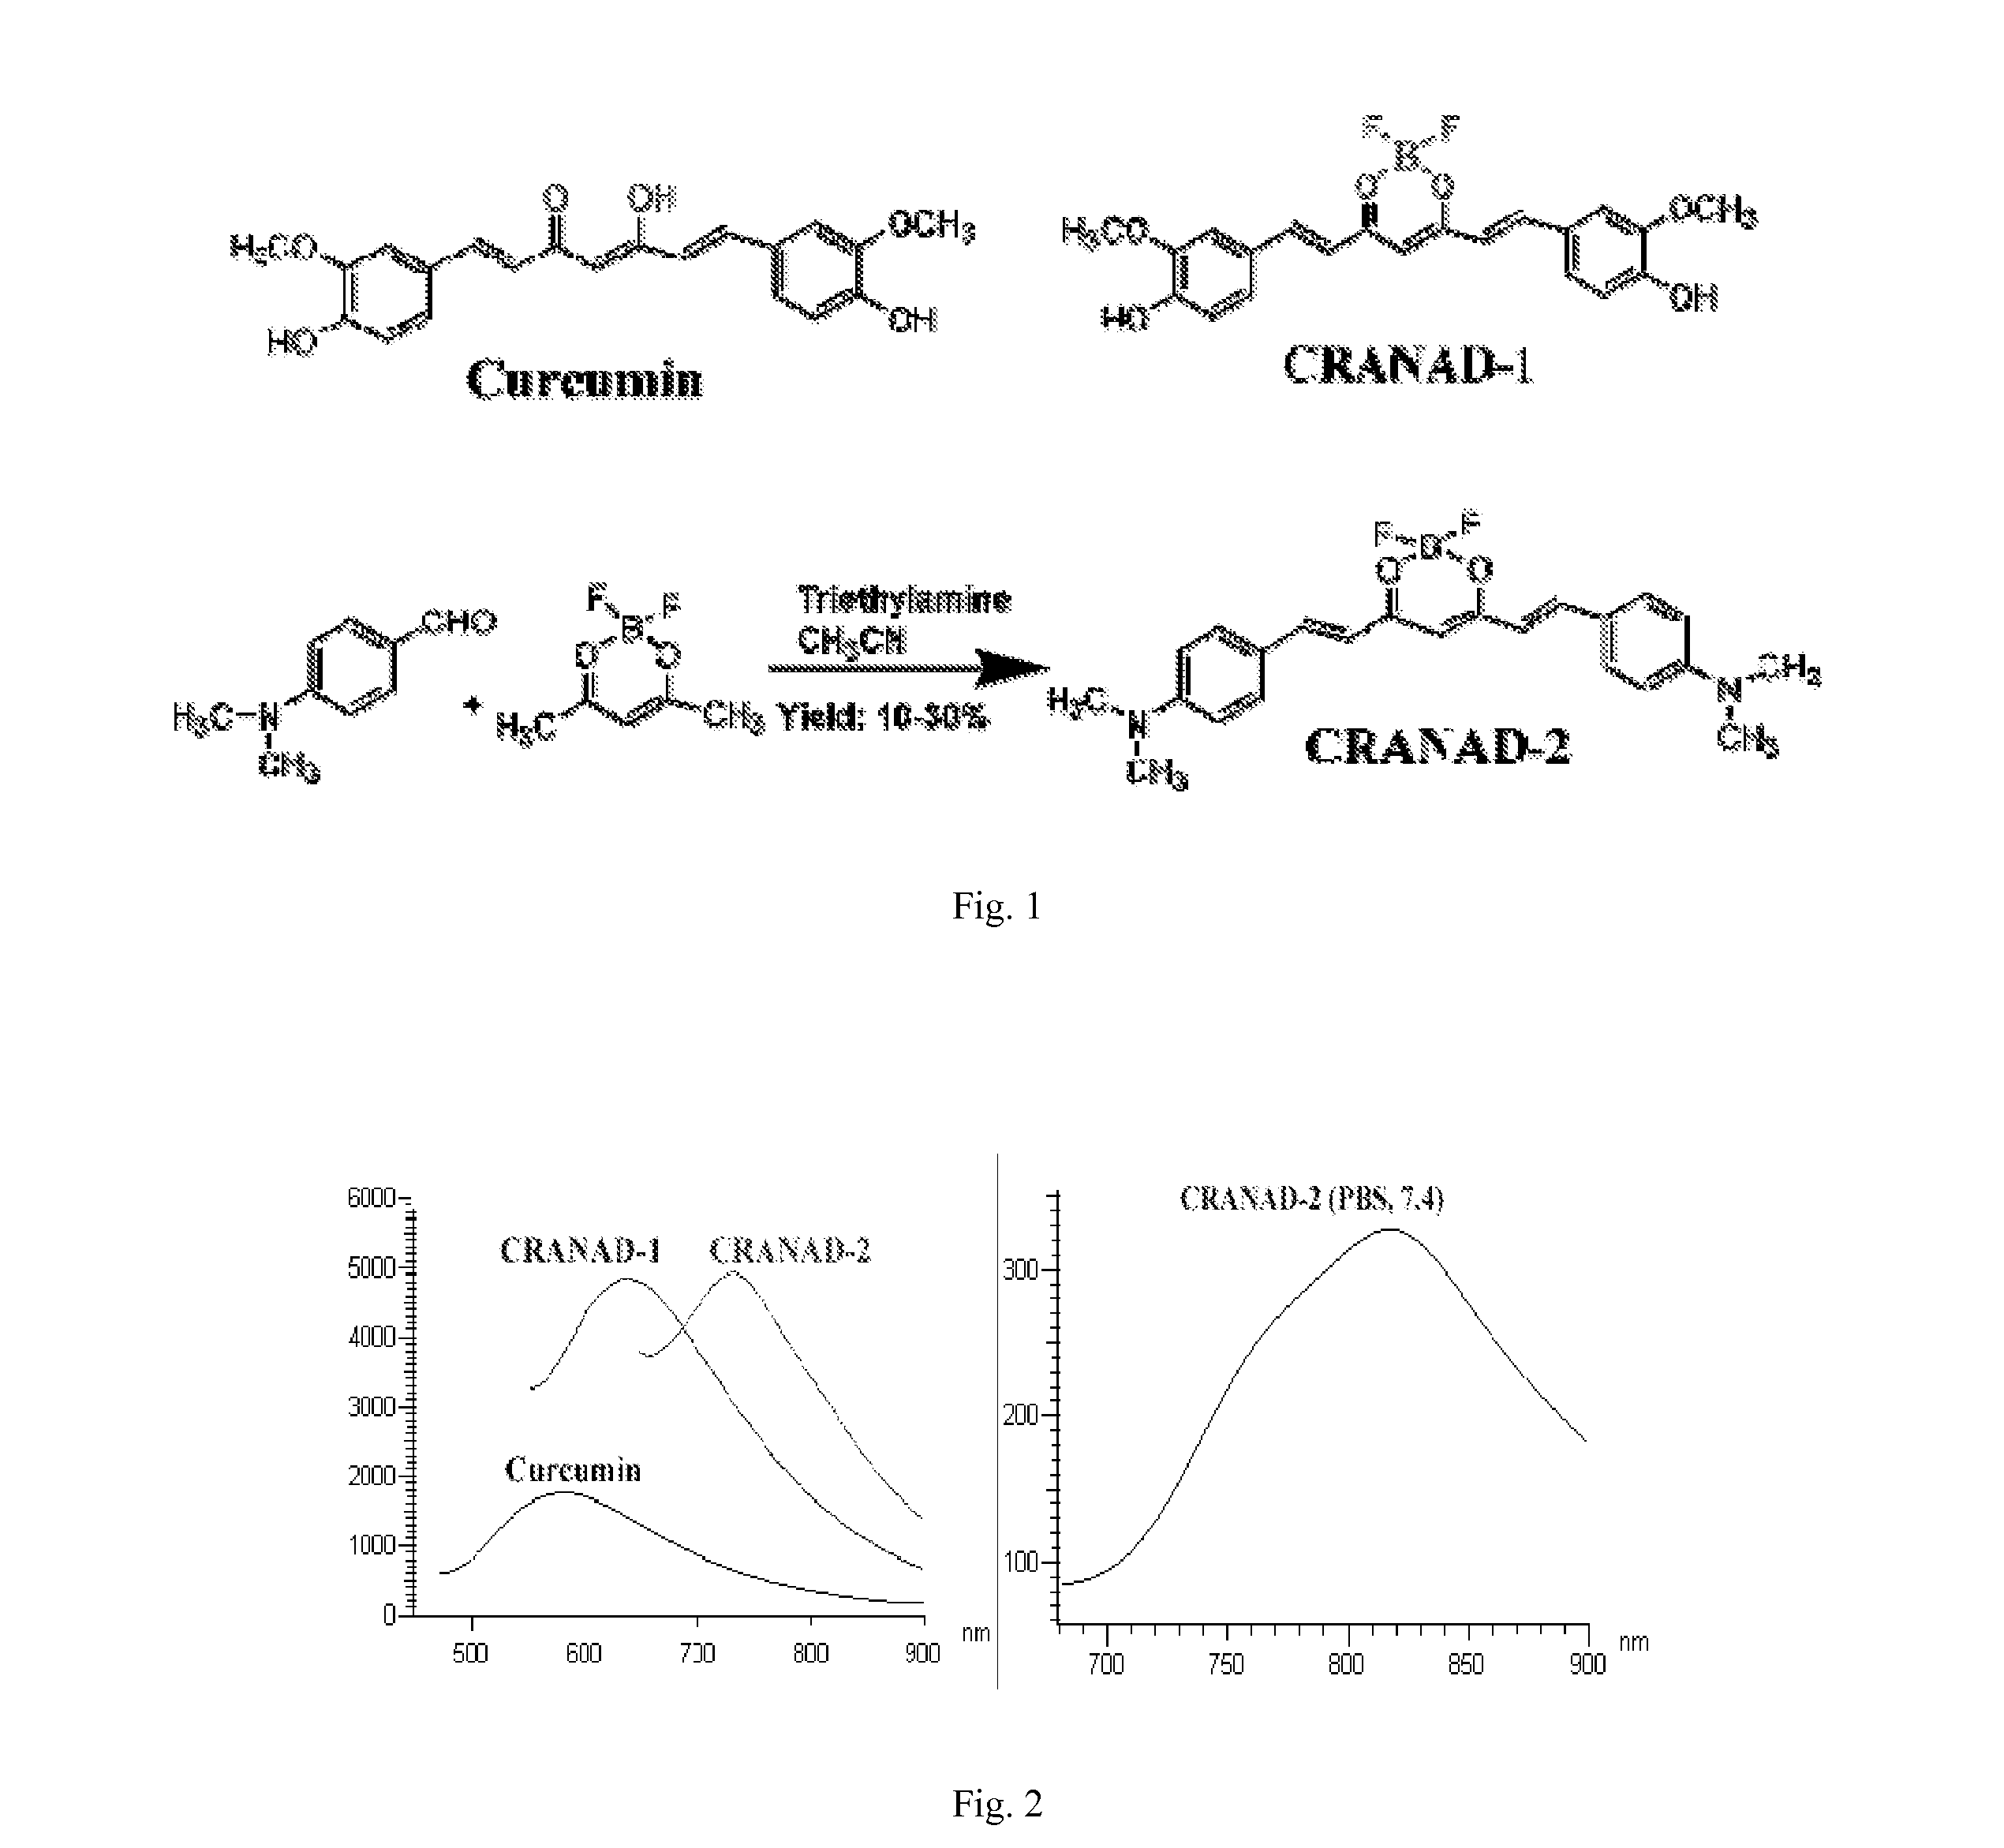 Curcumin derivatives for amyloid-beta plaque imaging